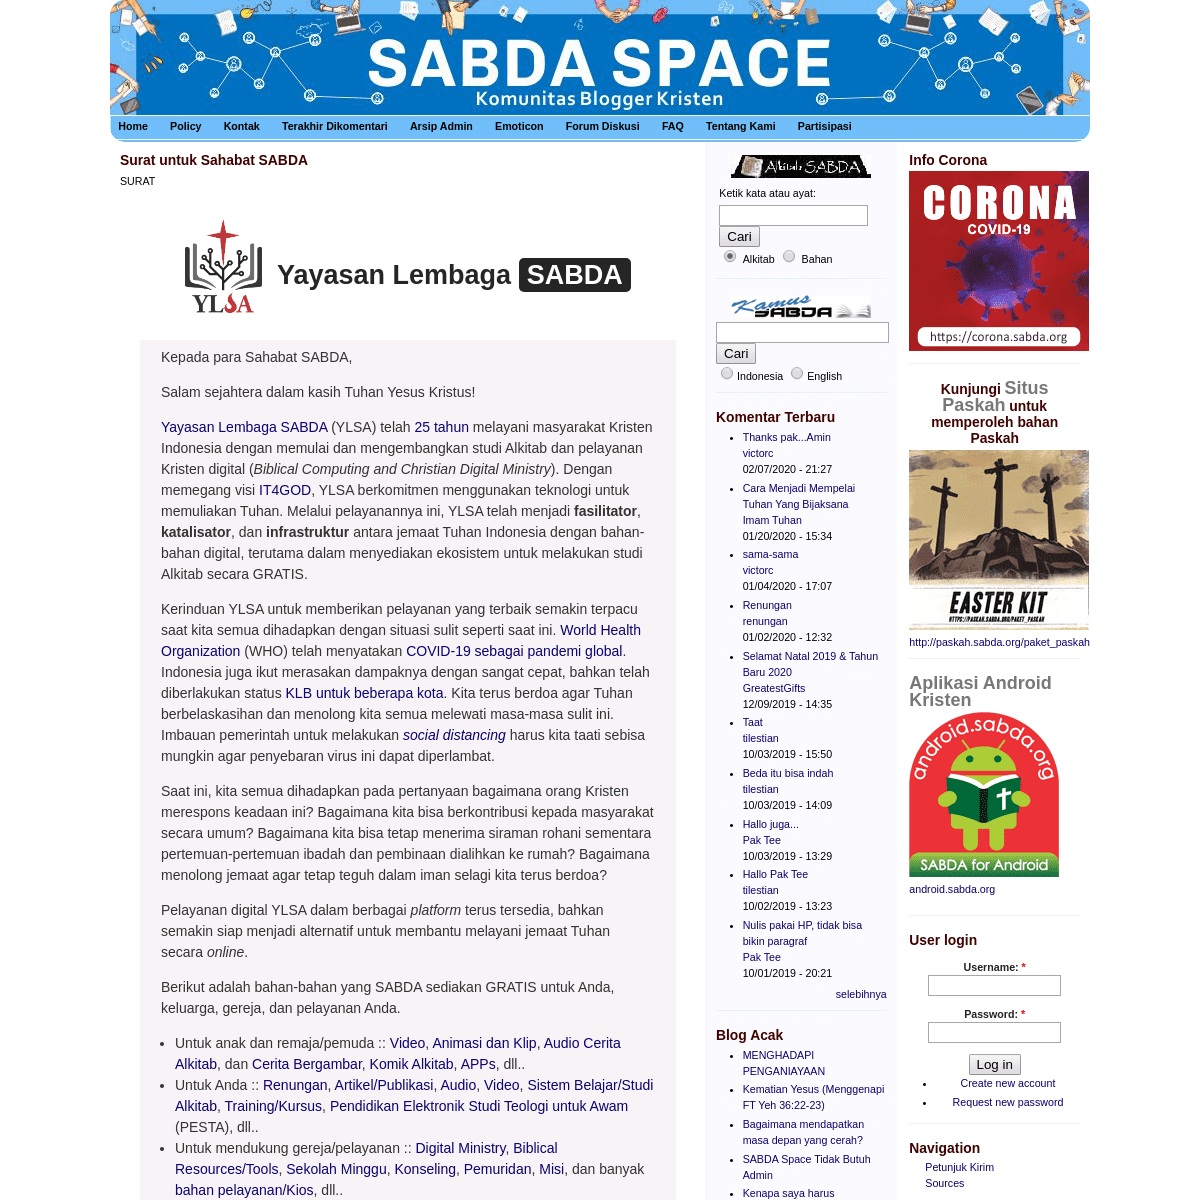 A complete backup of sabdaspace.org